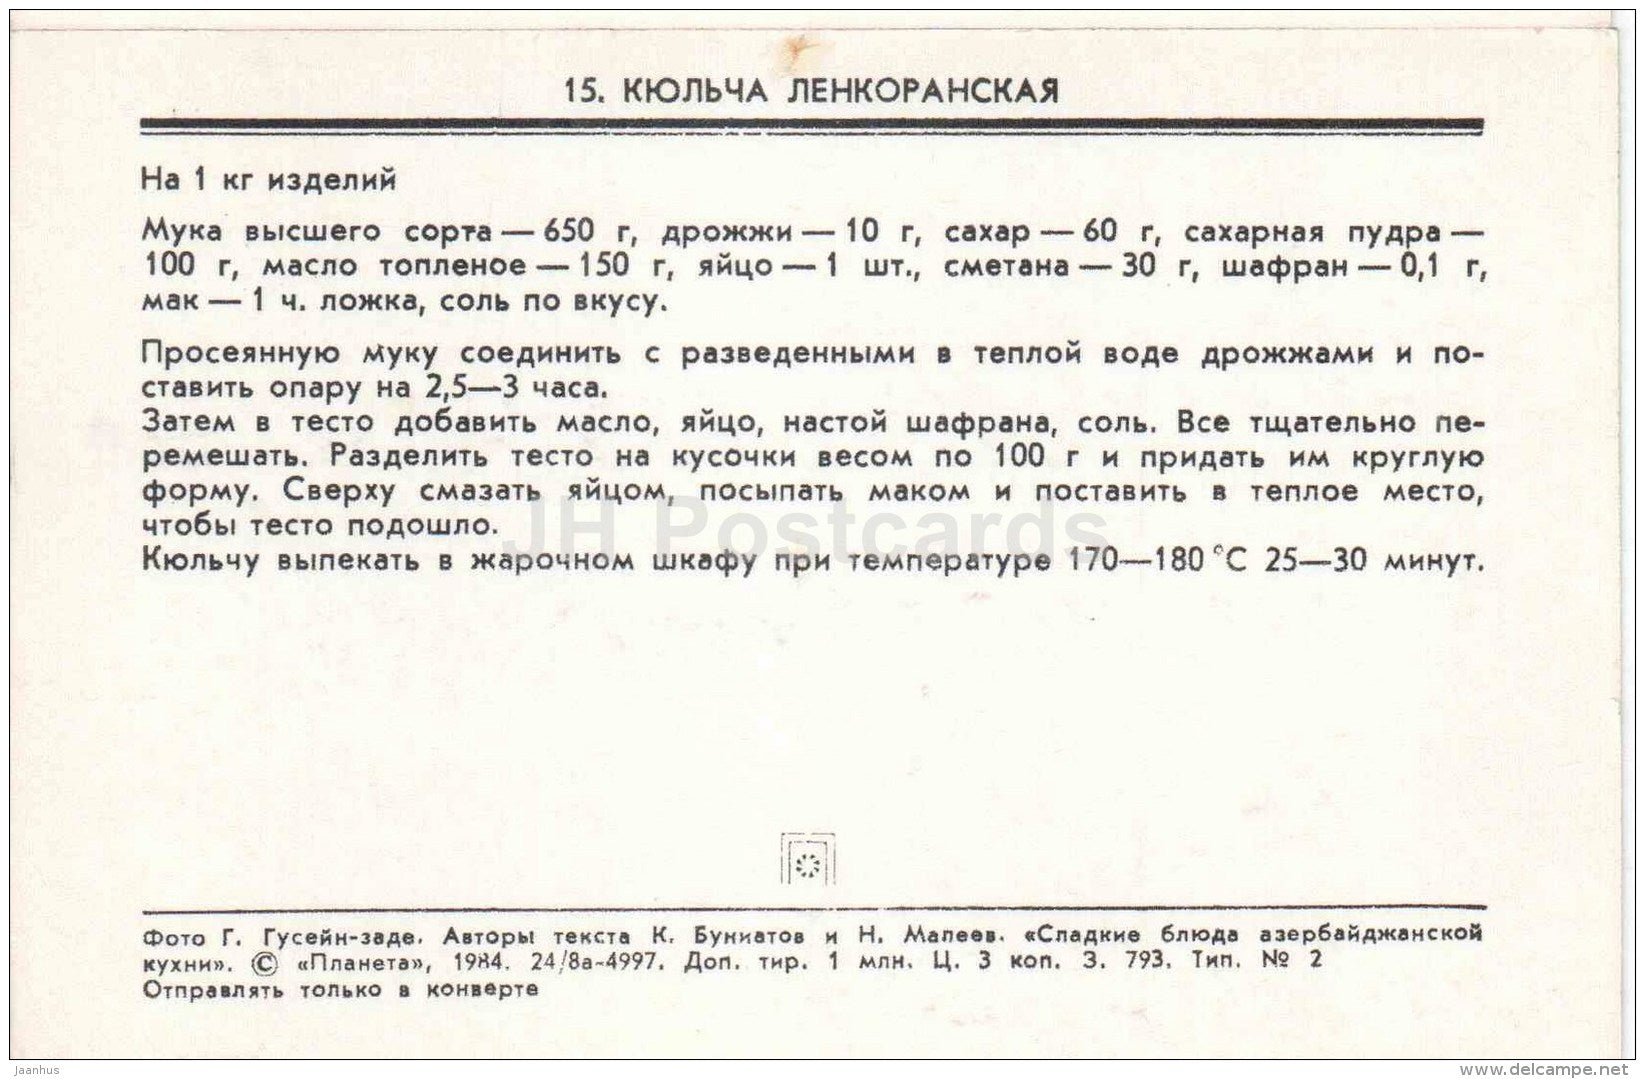 Lankaran kulcha - pastry - dishes - Azerbaijan dessert - cuisine - 1984 - Russia USSR - unused - JH Postcards